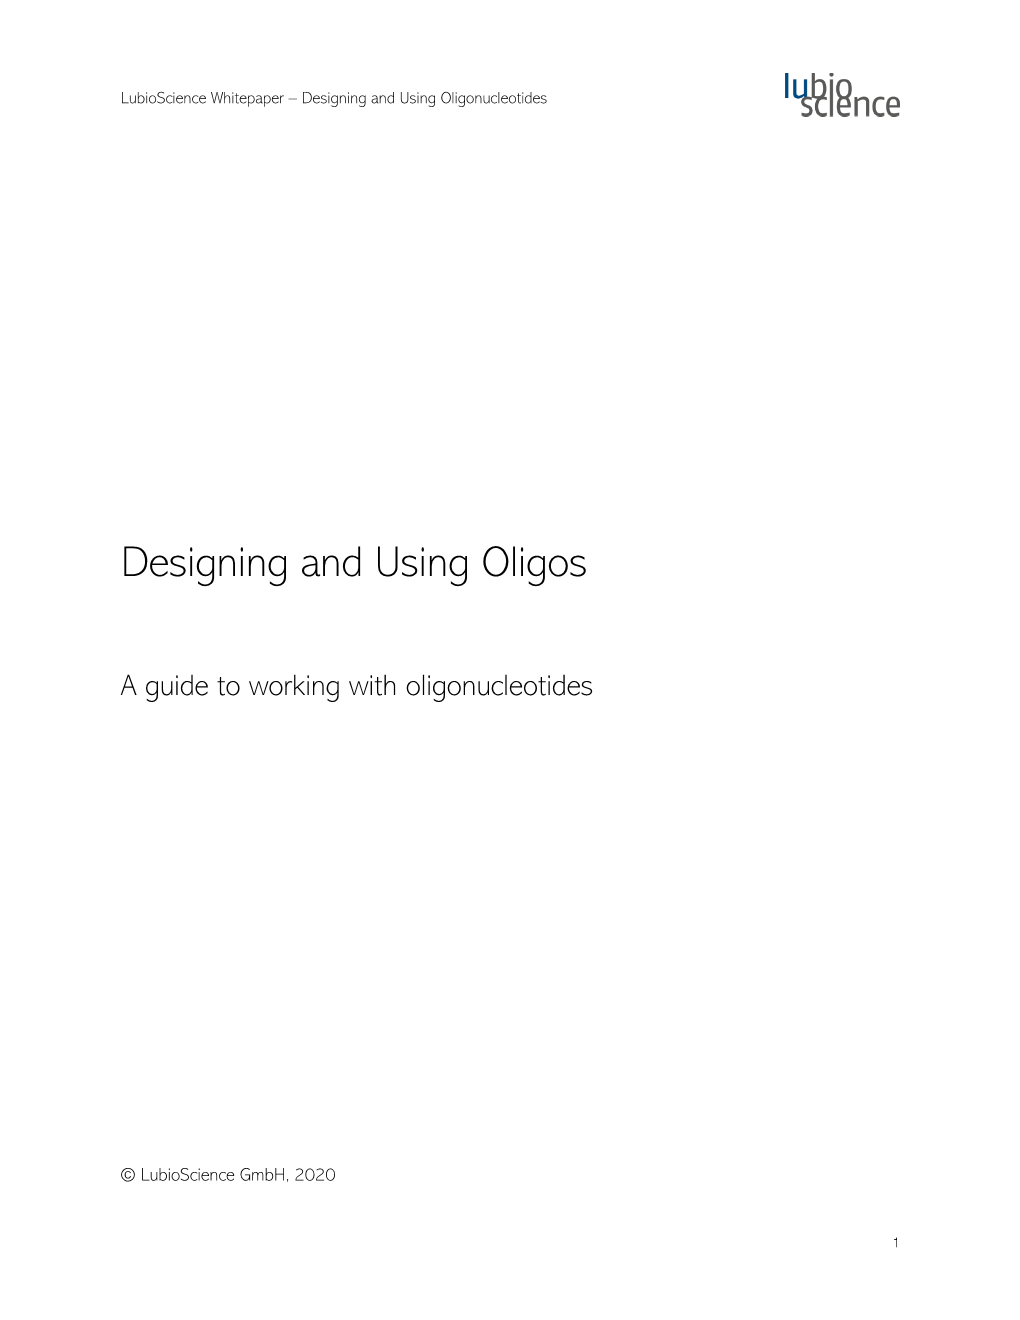 Designing and Using Oligos